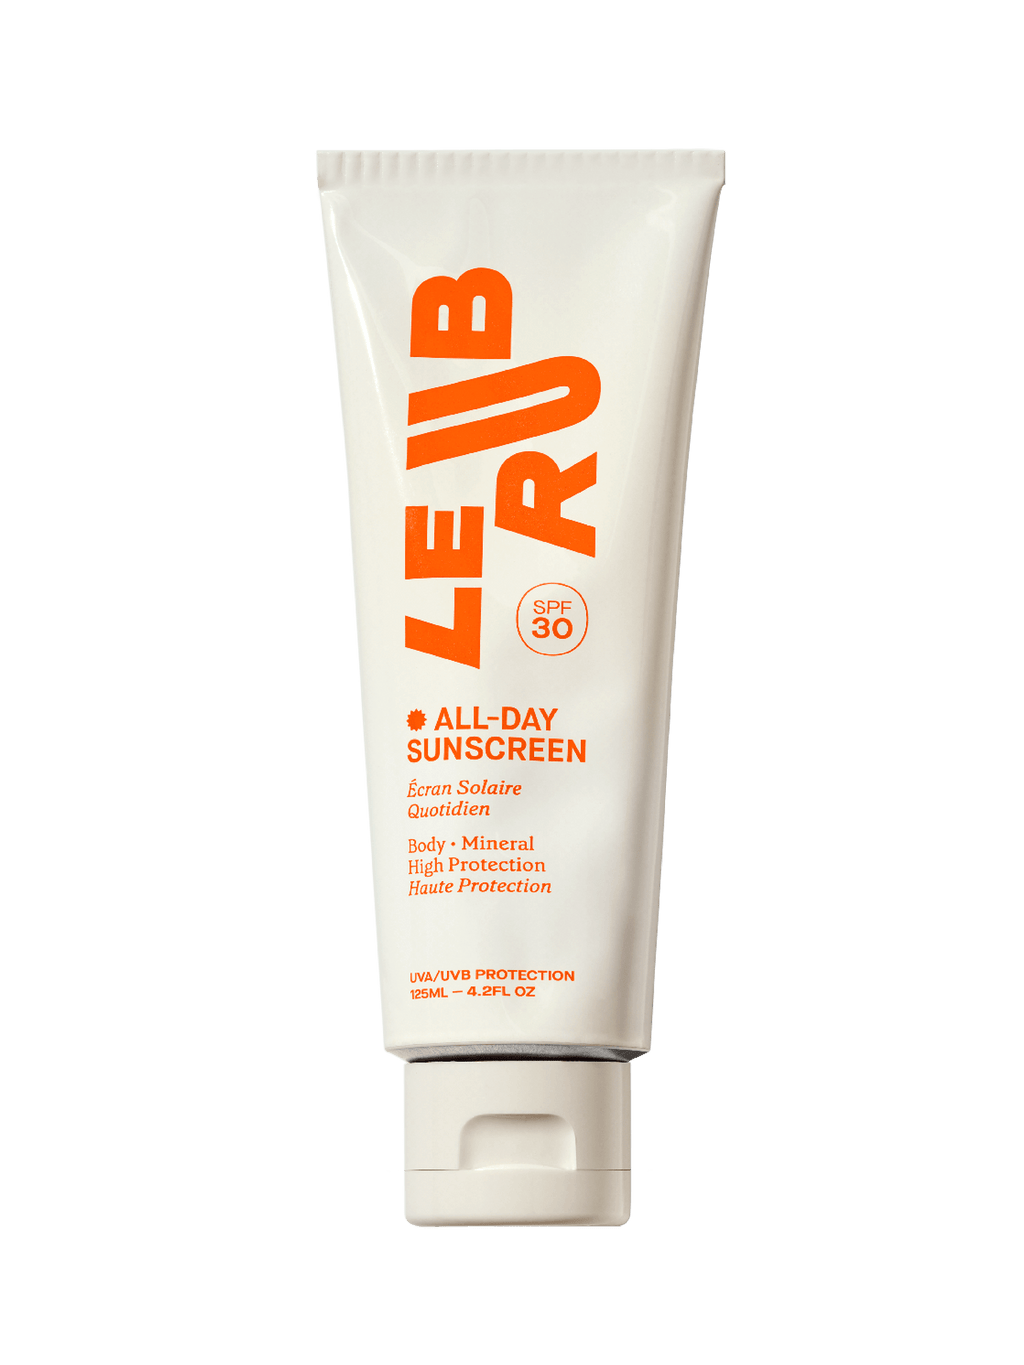 Le Rub All-Day Sunscreen SPF30